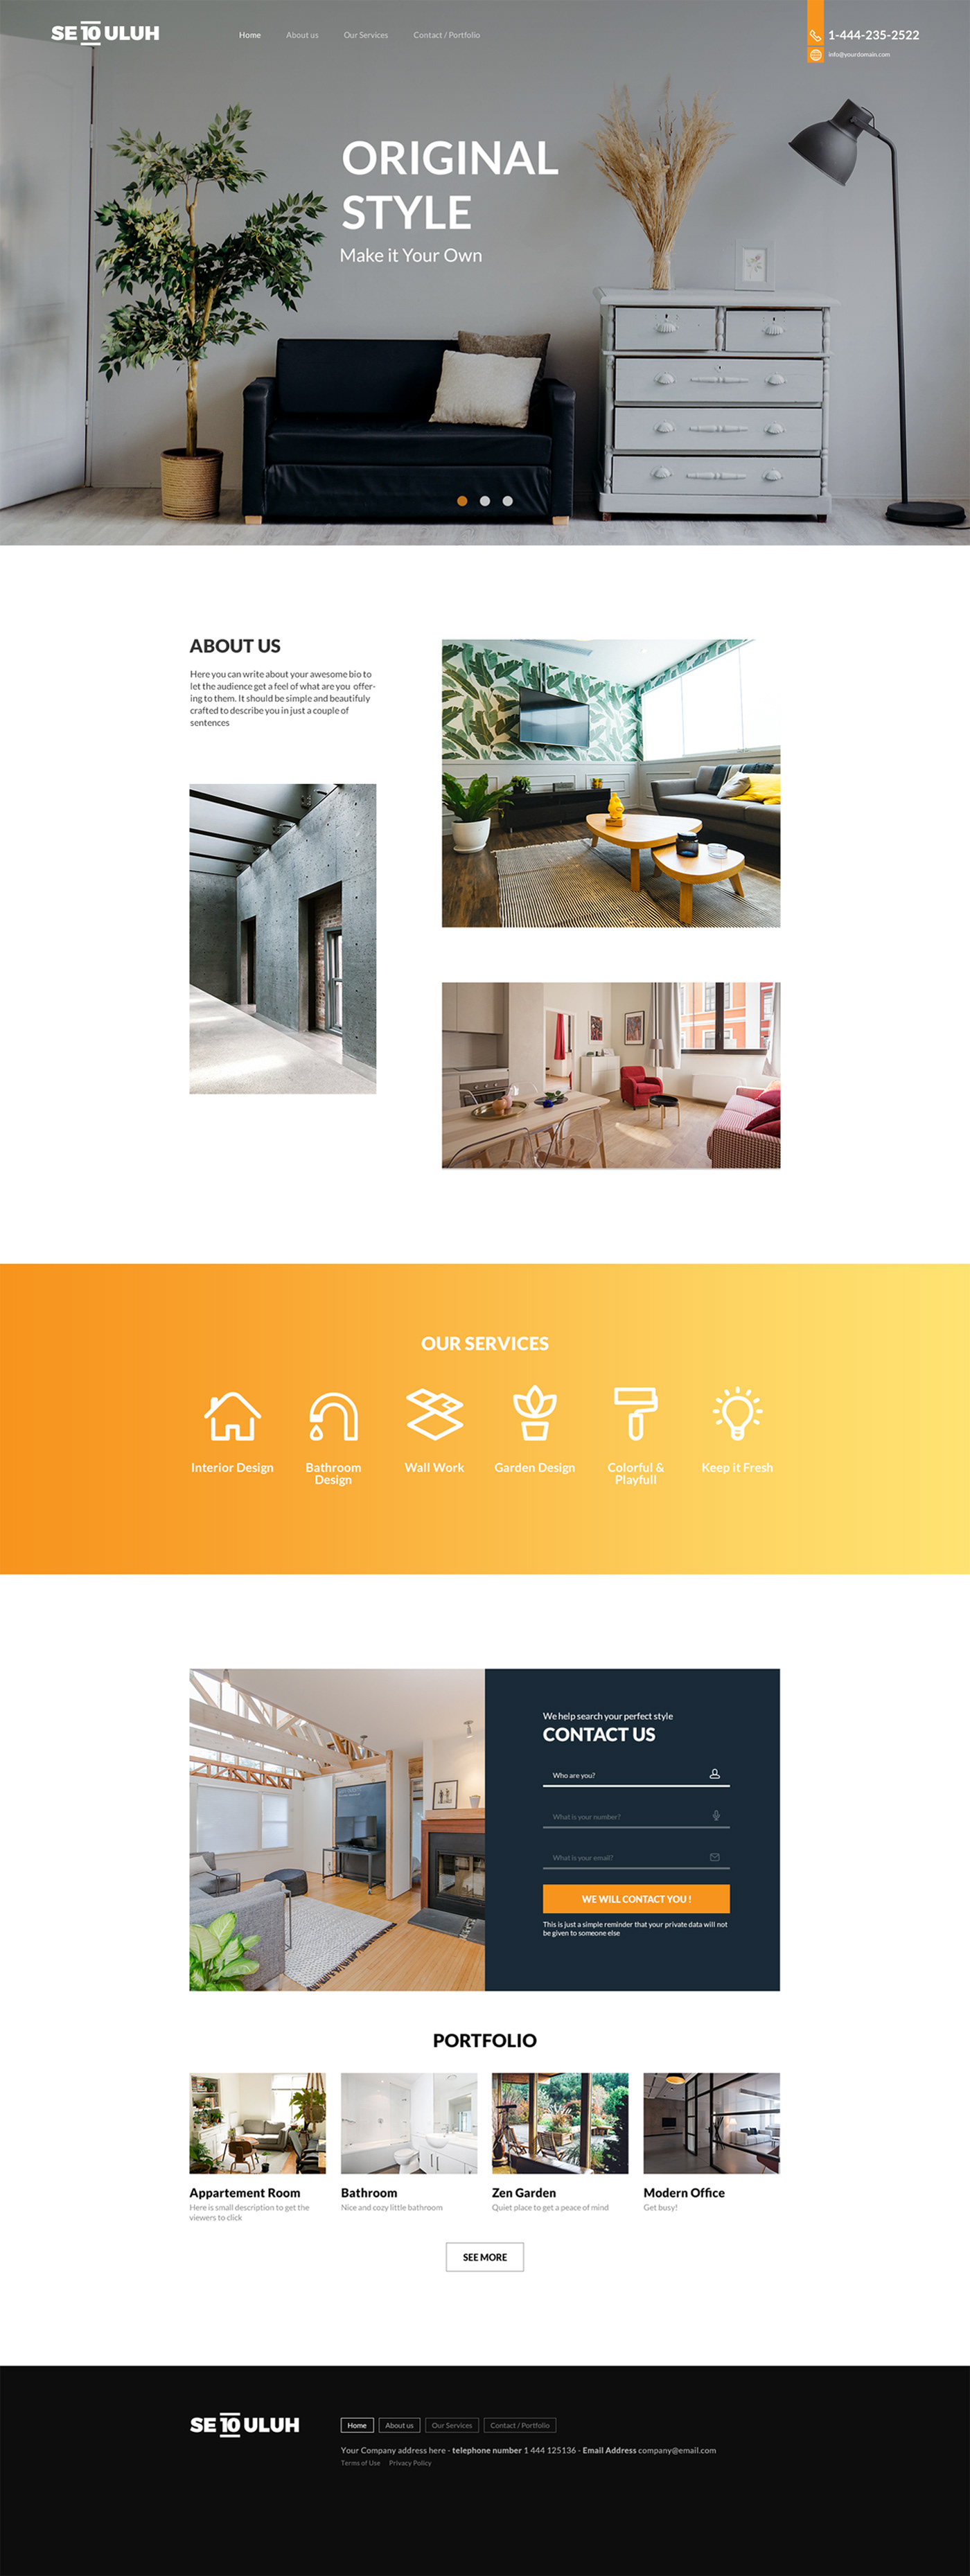 Free Template Web Design  interior website modern website template